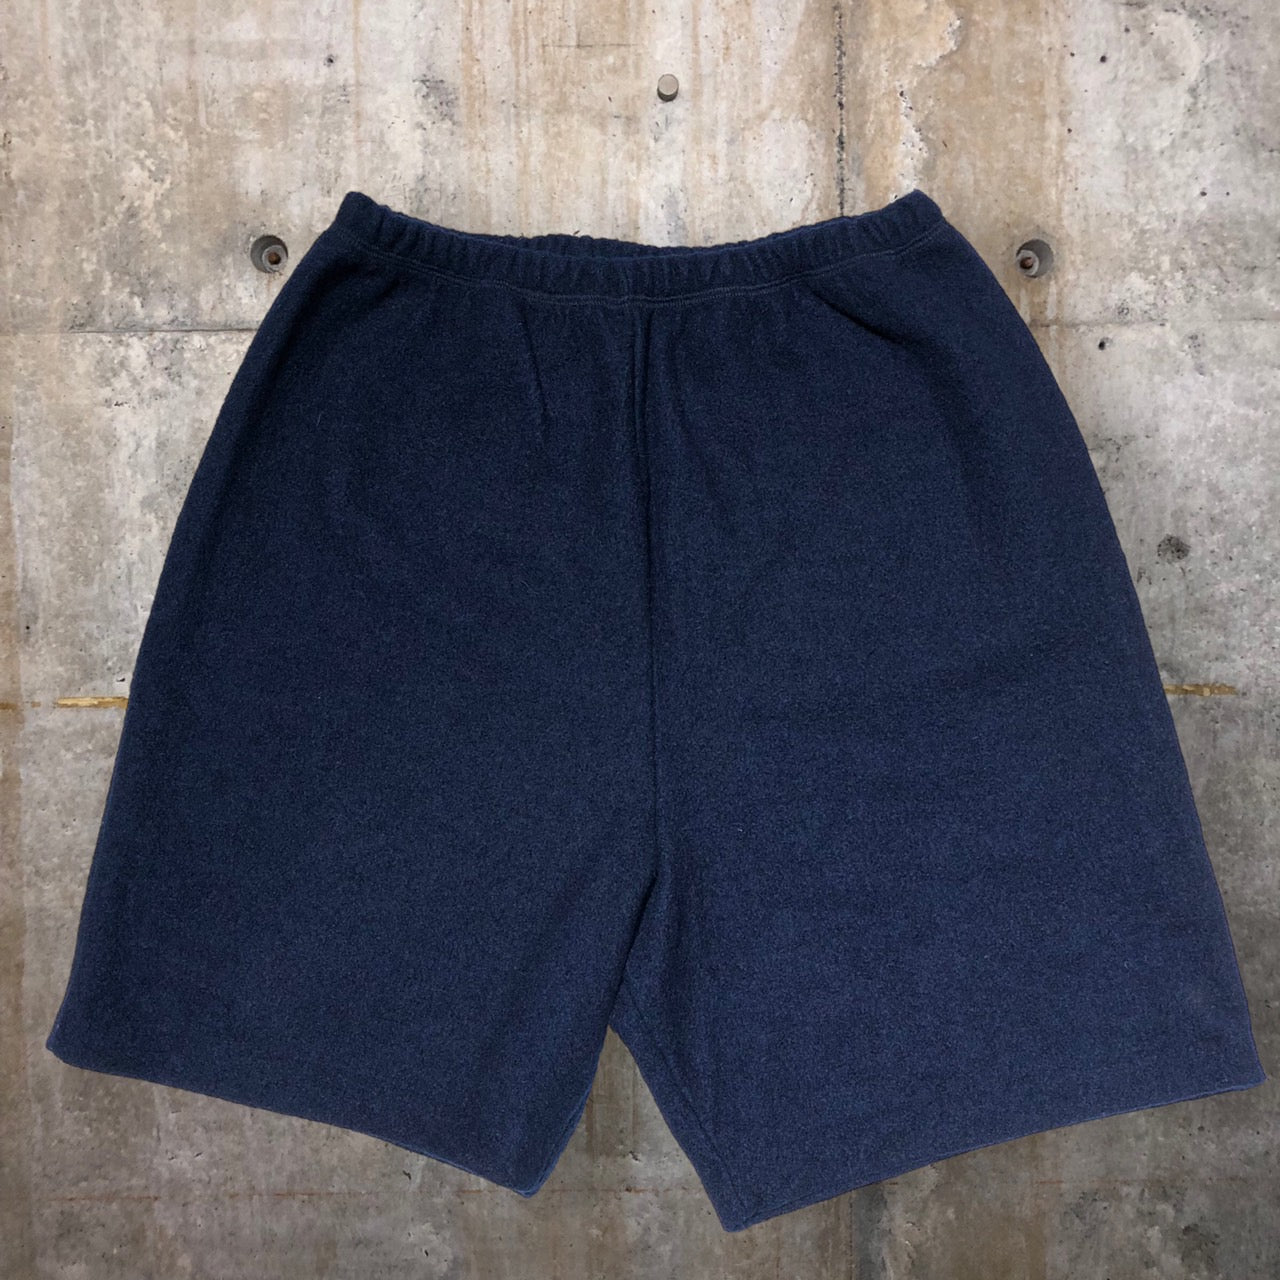 i.s. ISSEY MIYAKE(アイエス イッセイミヤケ) 90's back print wool short pants/ウールショートパンツ IS33-JF018 M ネイビー